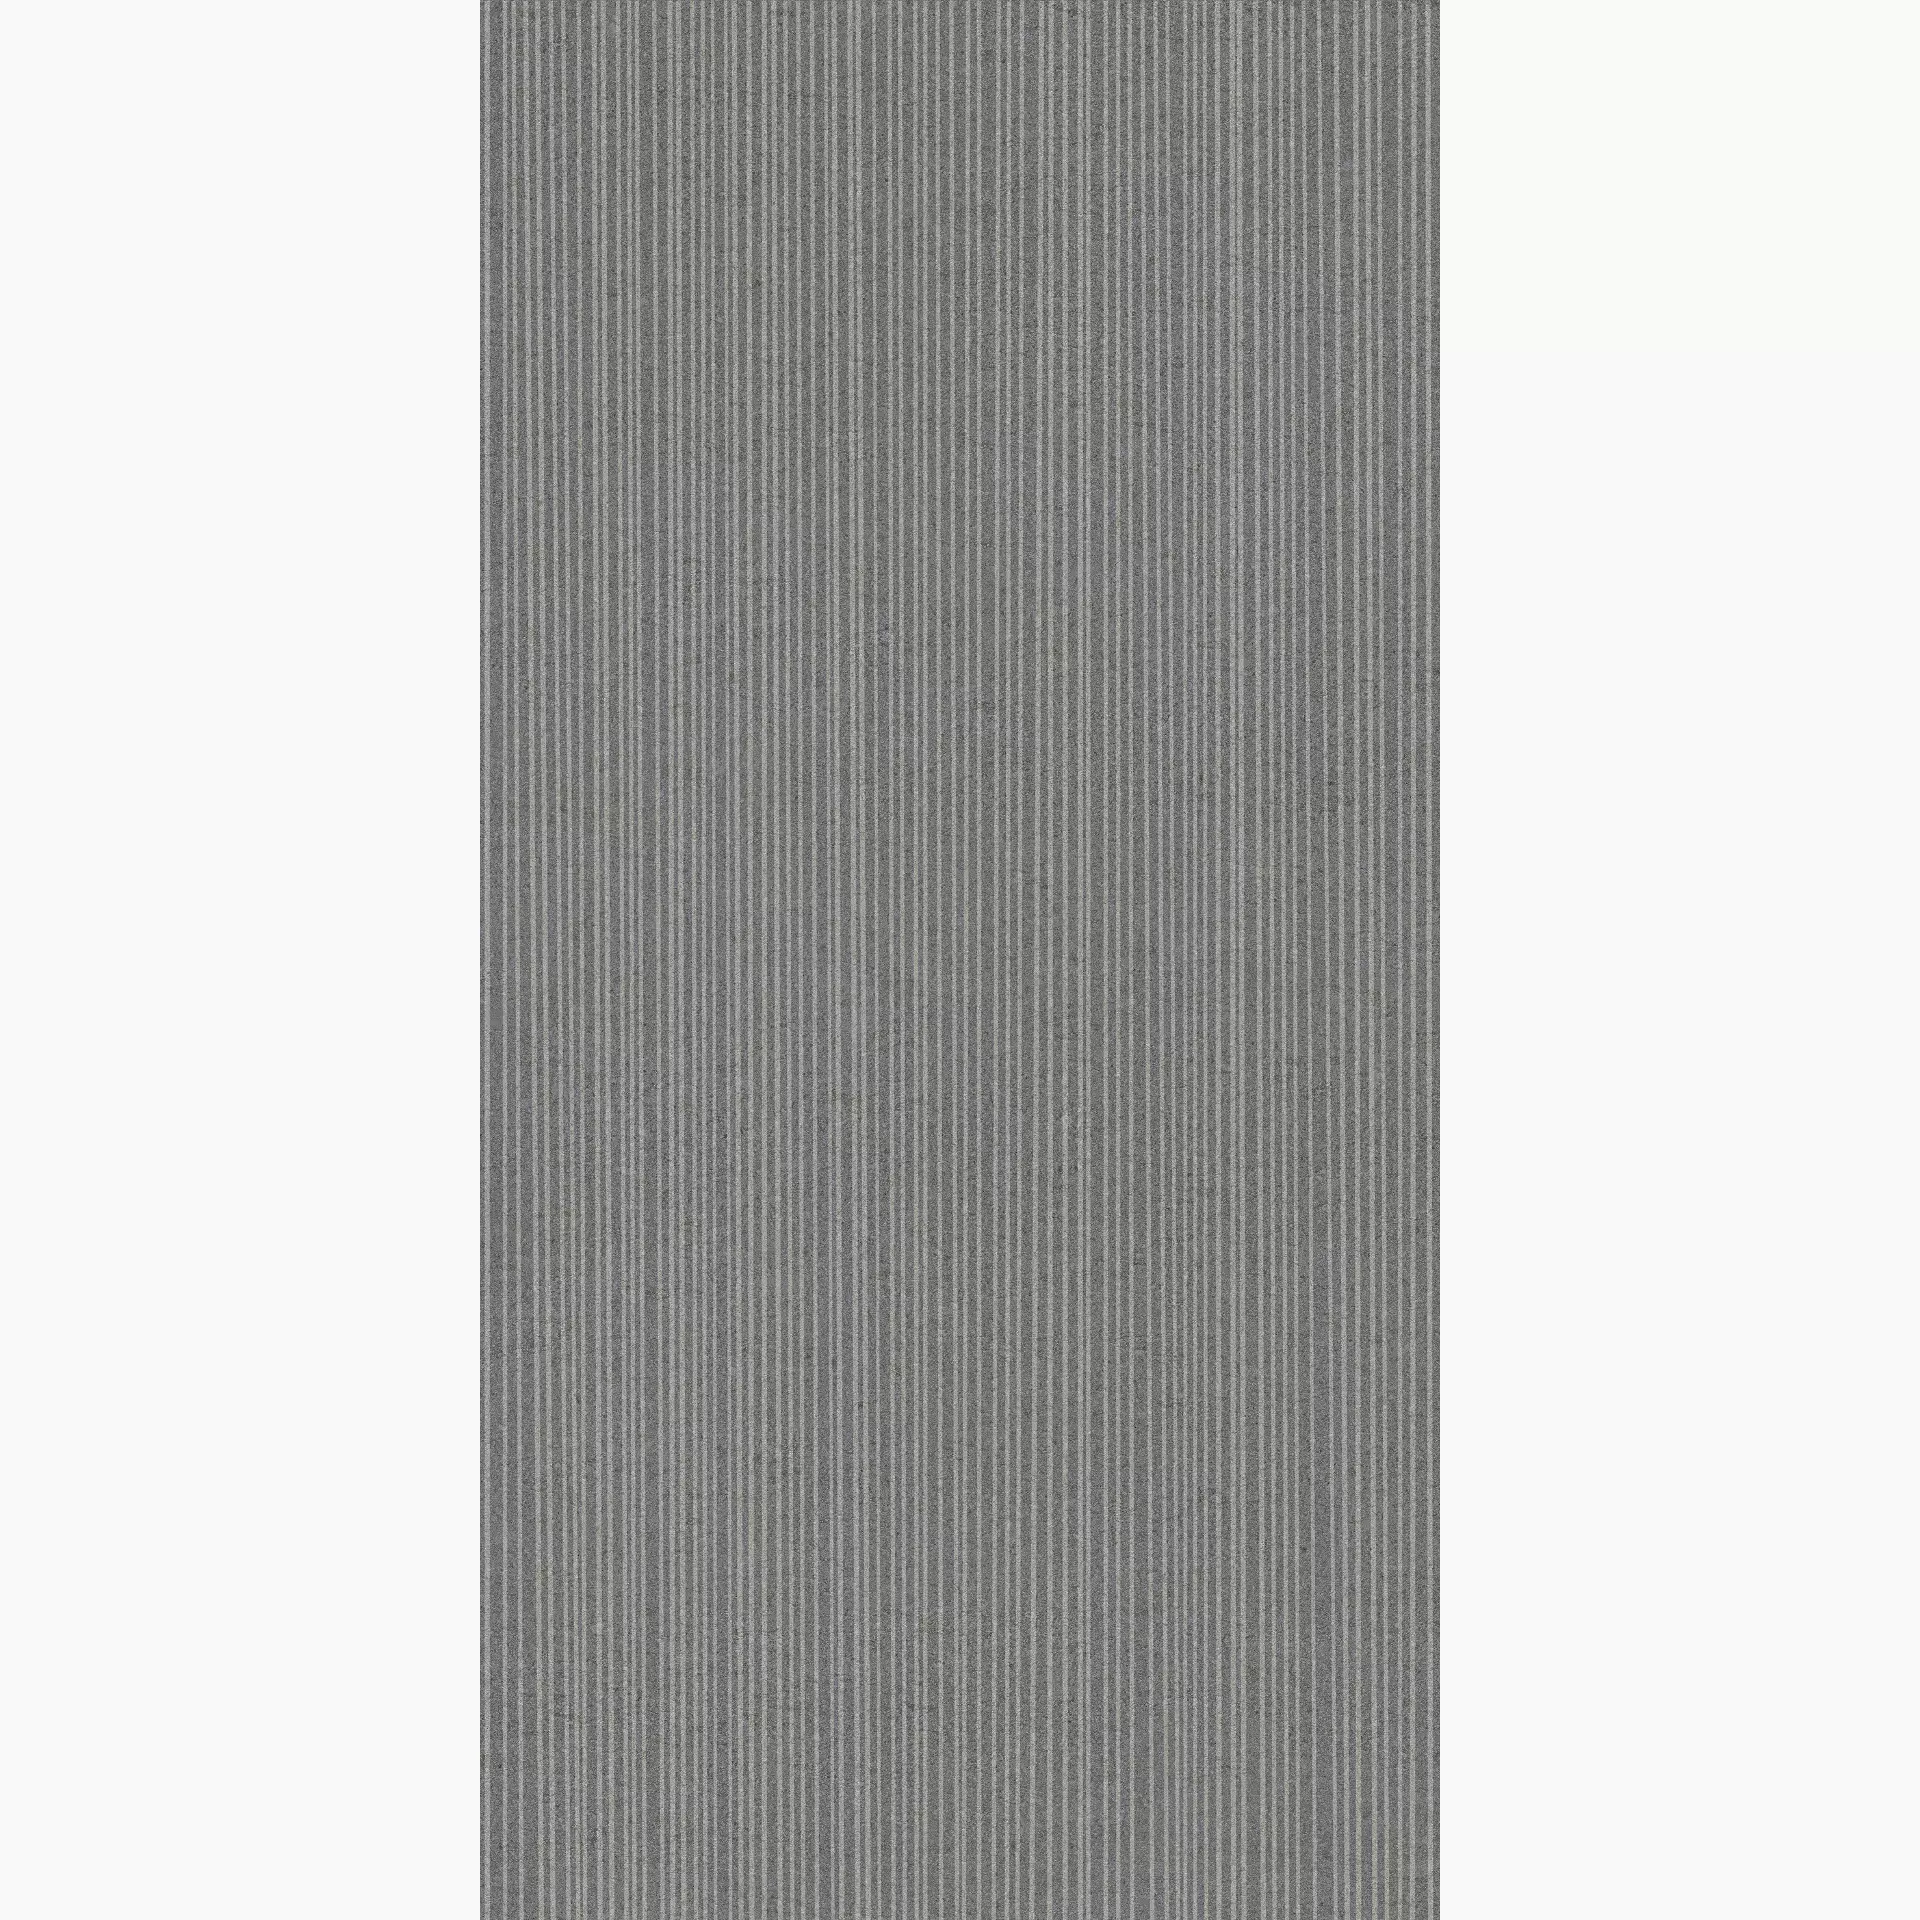 Coem Tweed Stone Graphite Naturale Graphite 0TW710R natur 75x149,7cm rektifiziert 10mm